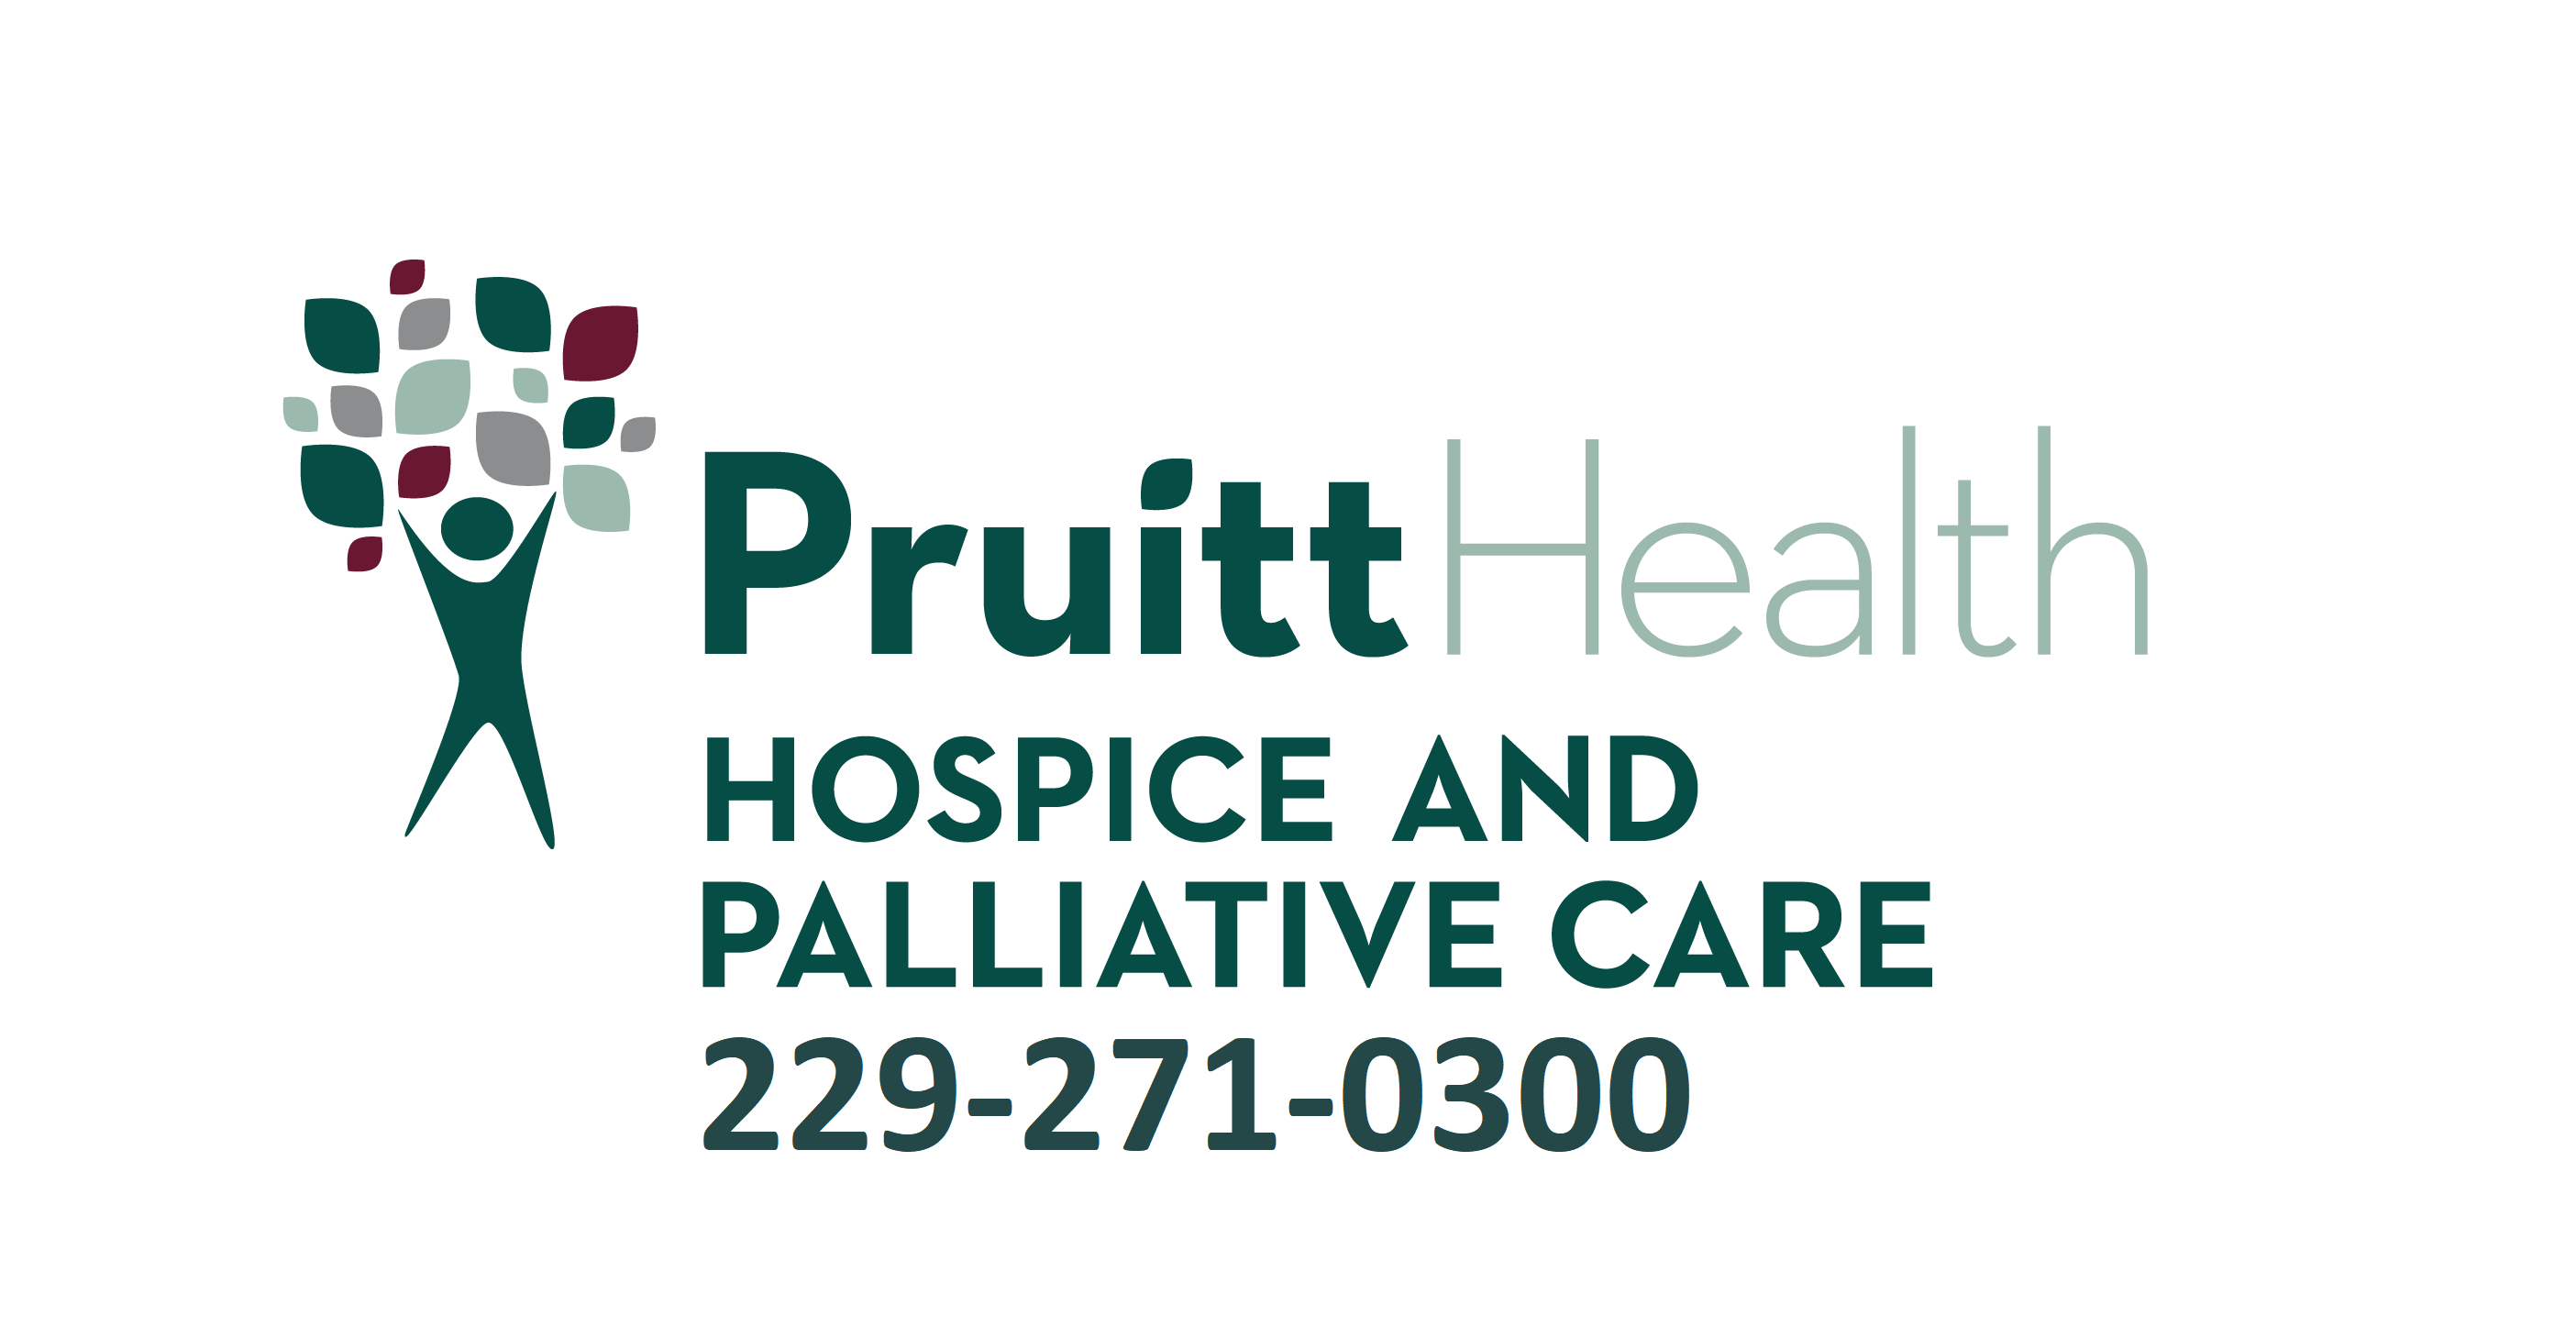 1. Pruitt Health Hospice (Premier)